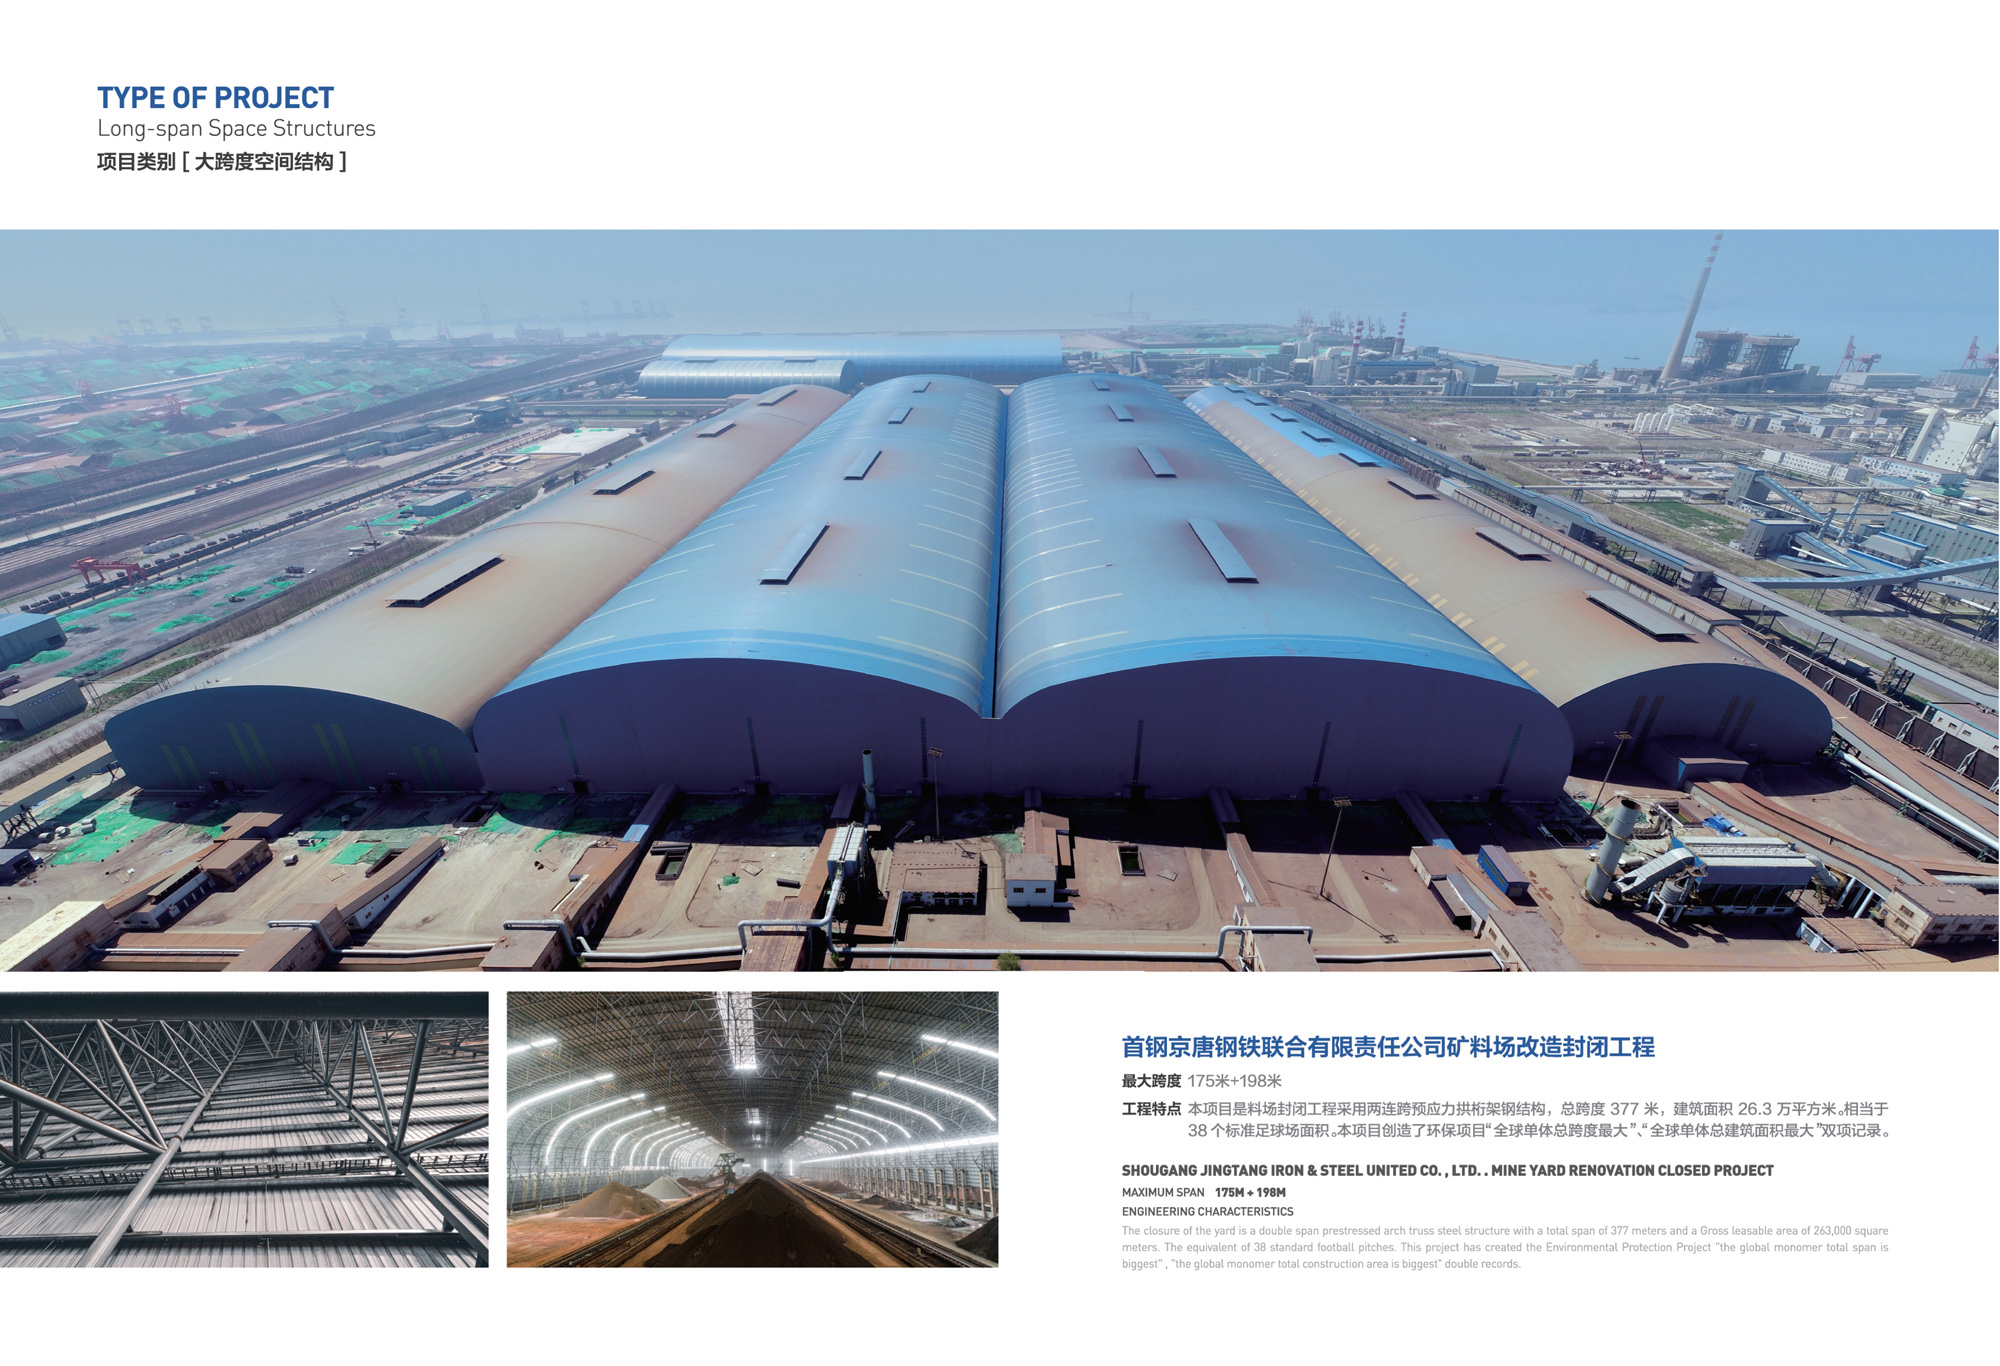 Shougang Jingtang Steel United Co., Ltd. Mine Material Yard Renovation and Closure Project